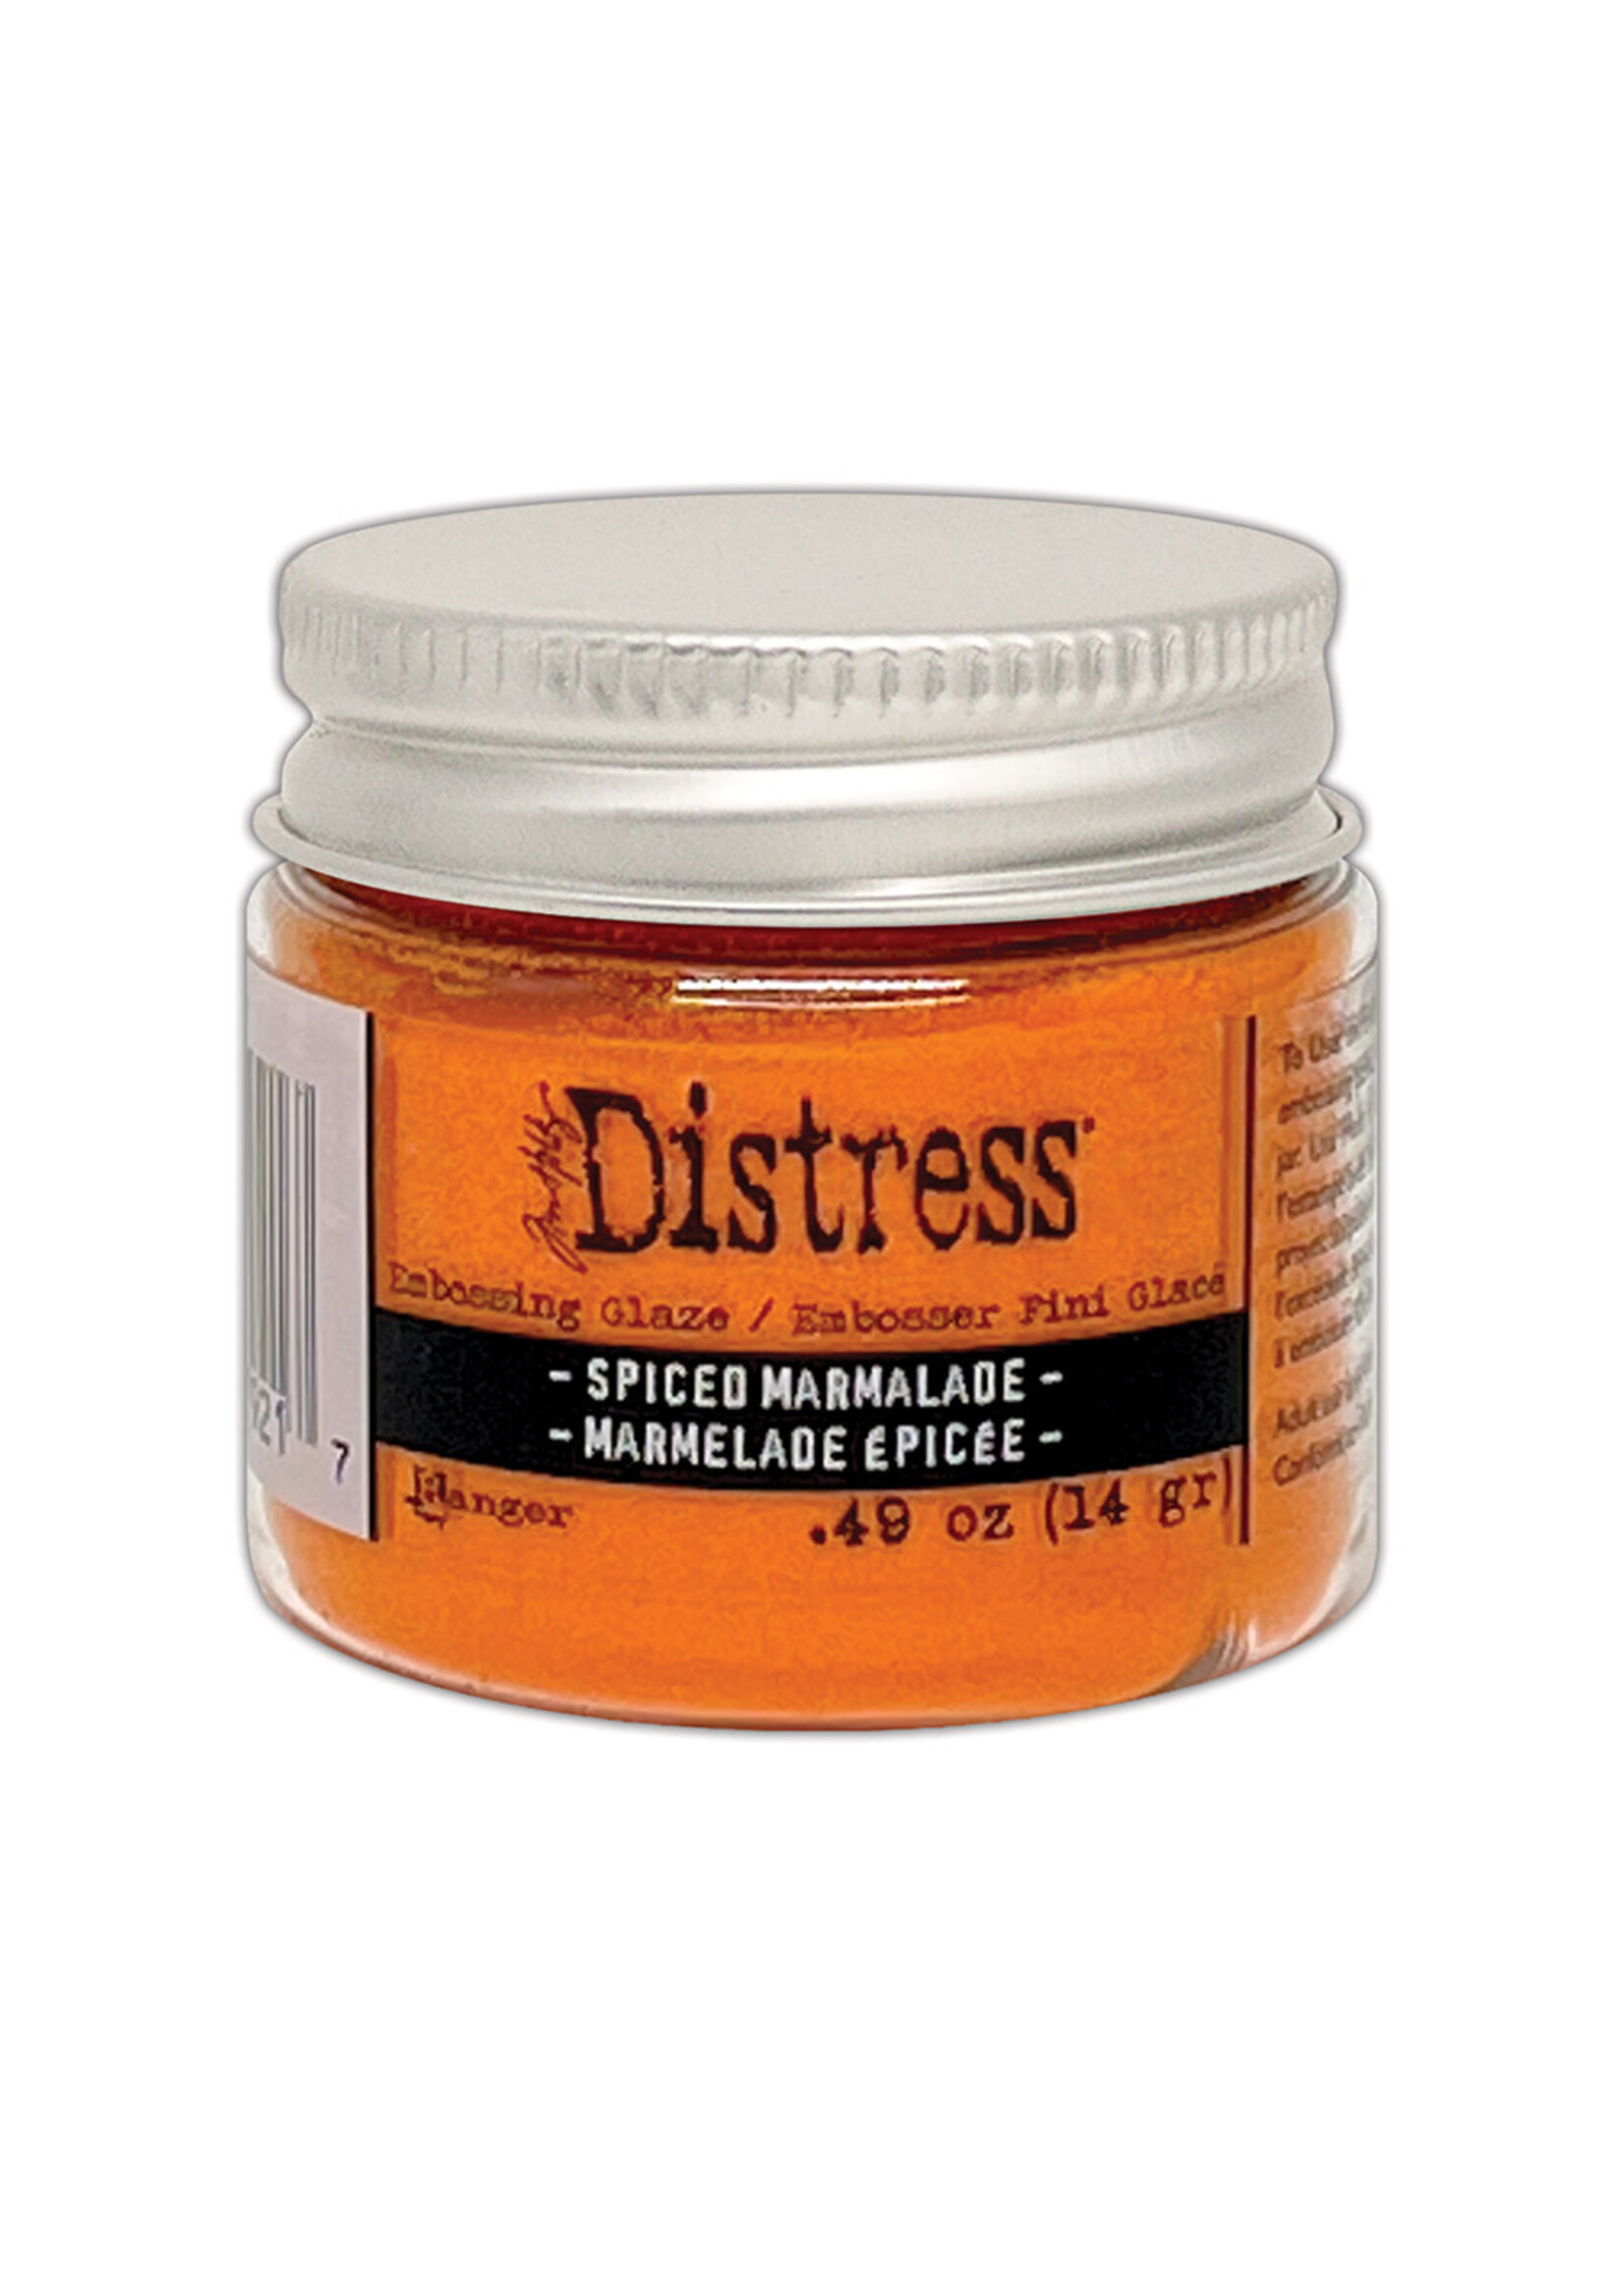 Tim Holtz Distress Embossing Glaze: Spiced Marmalade